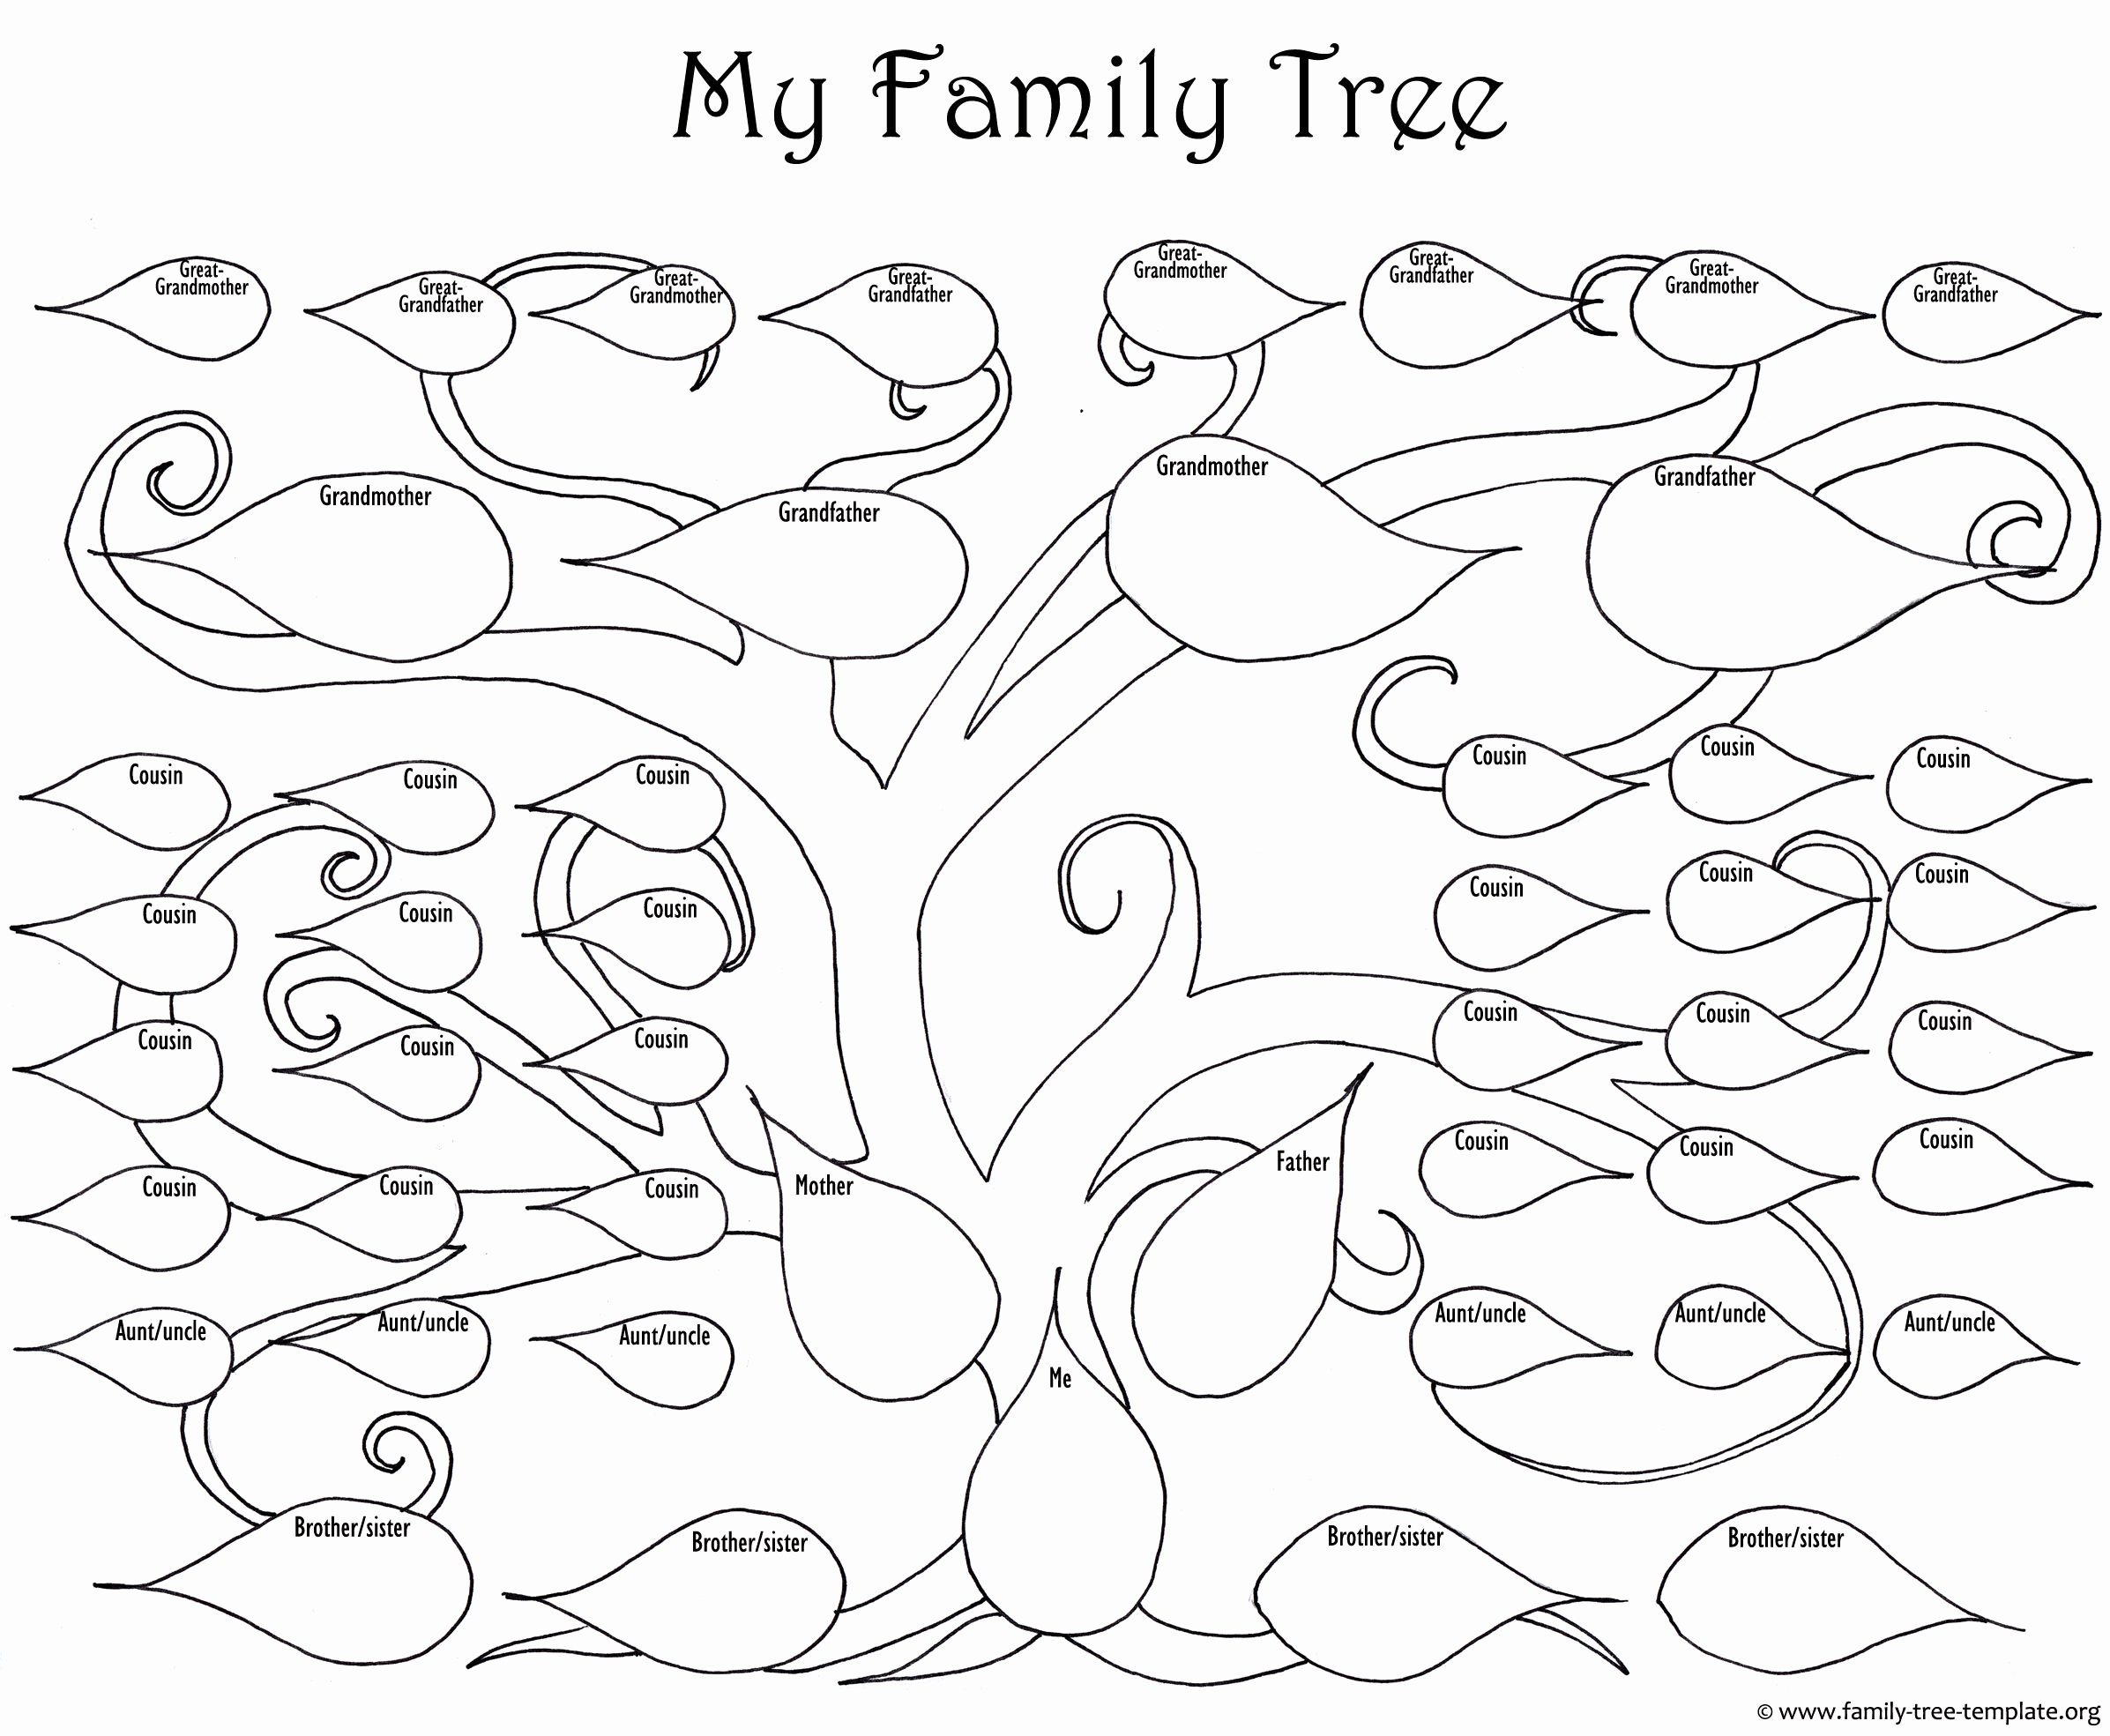 a printable blank family tree